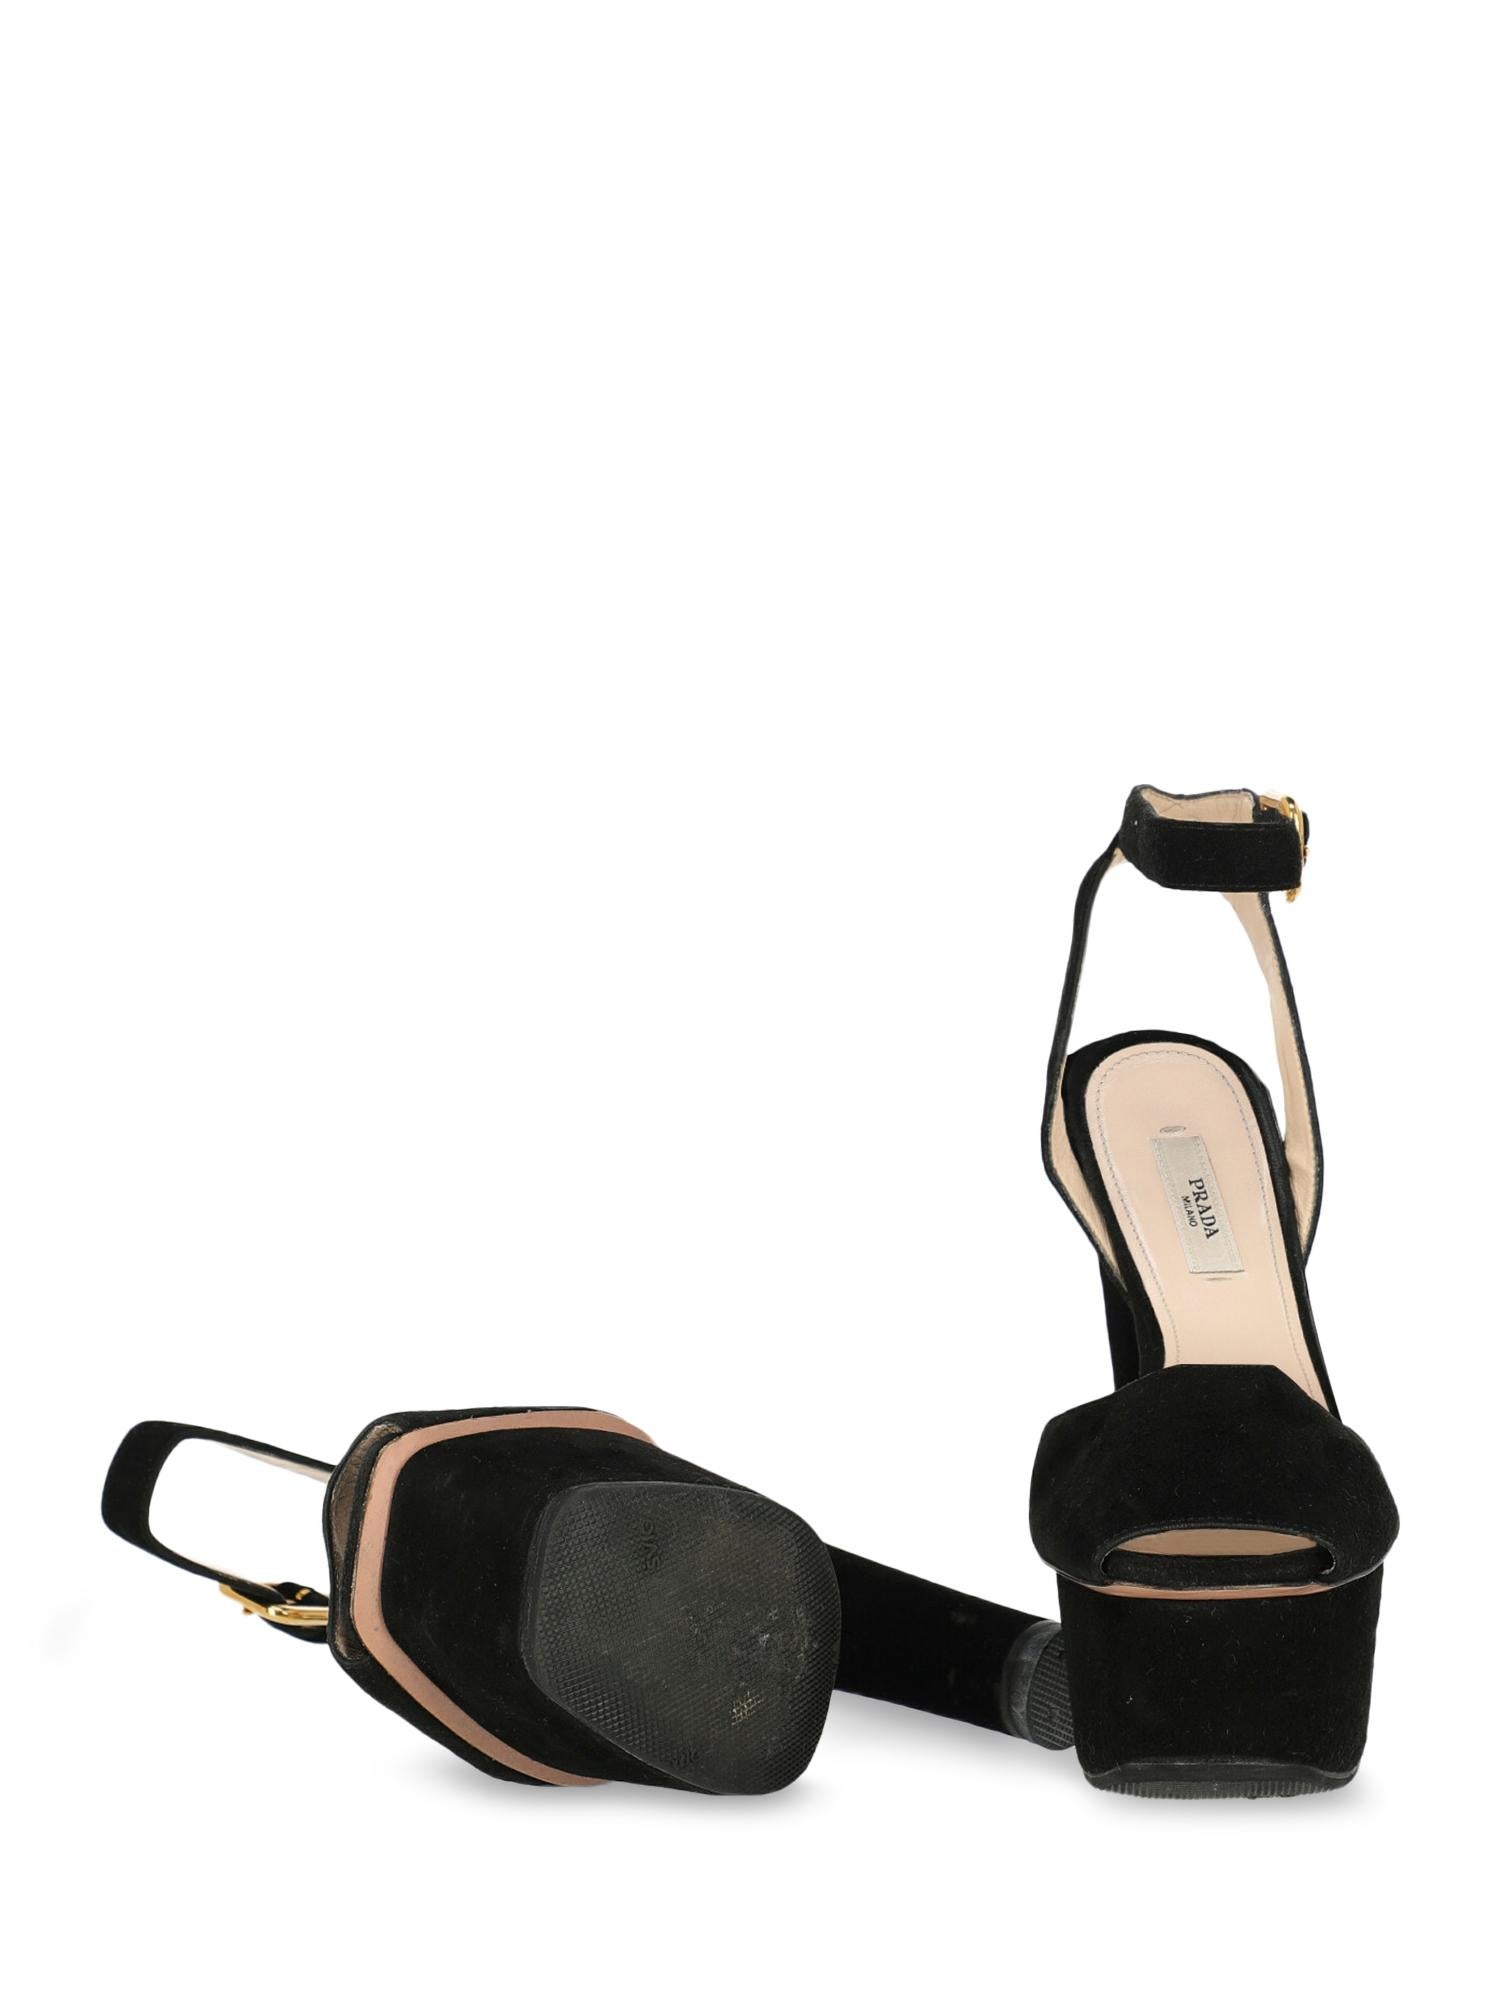 Prada Woman Sandals Black Leather IT 37 For Sale 1